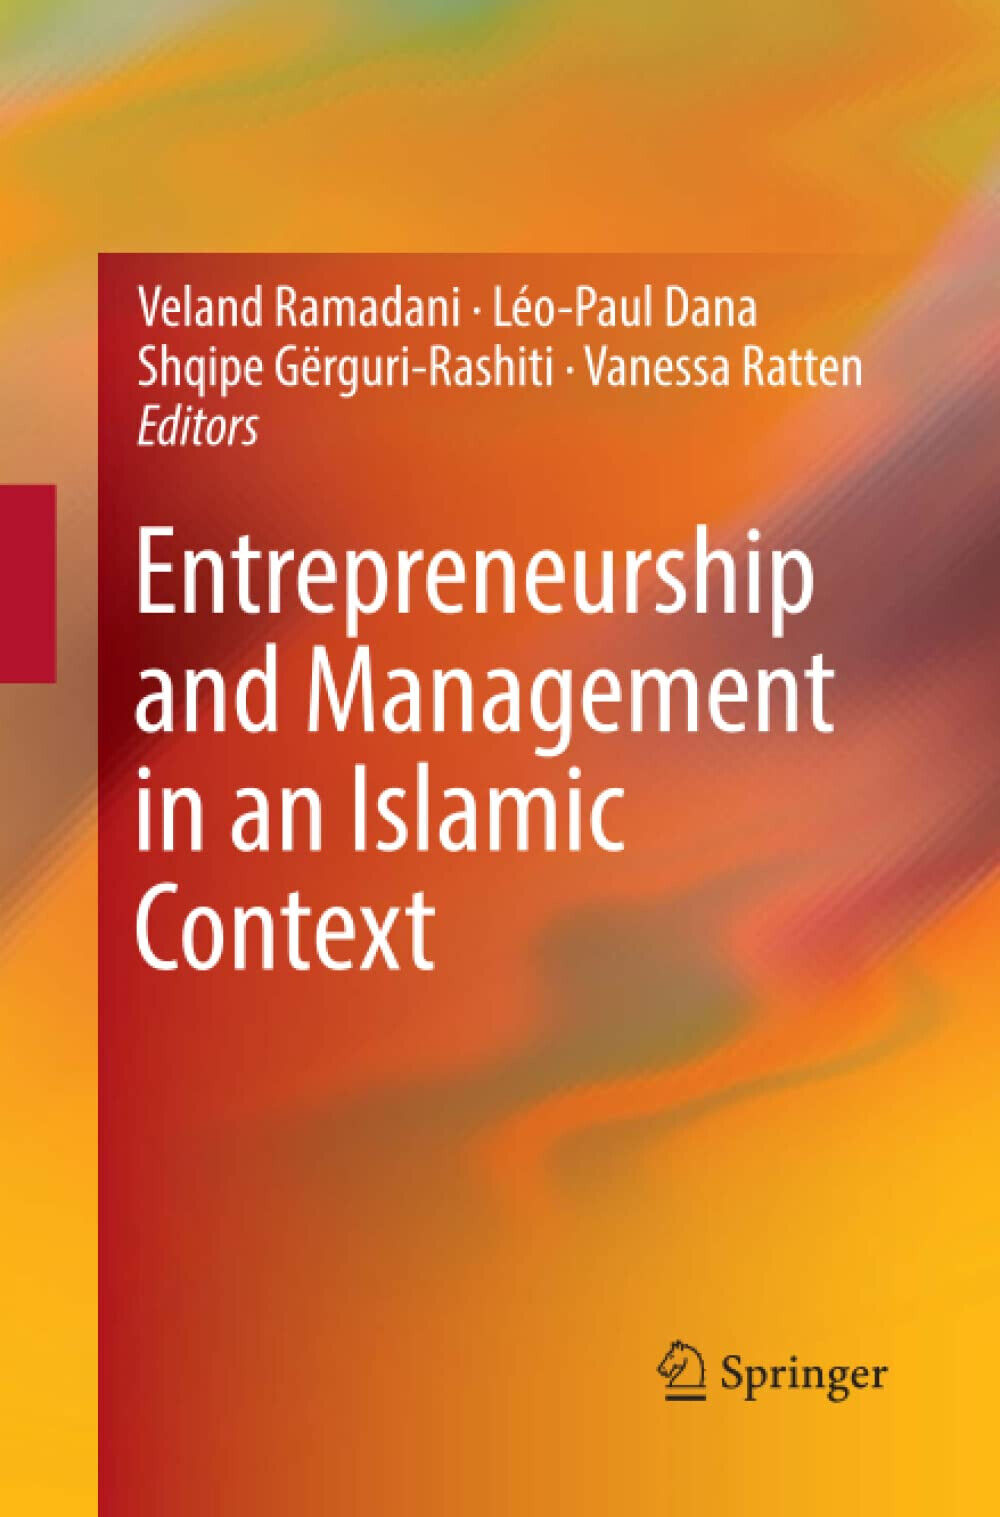 Entrepreneurship and Management in an Islamic Context - Veland Ramadani - 2018